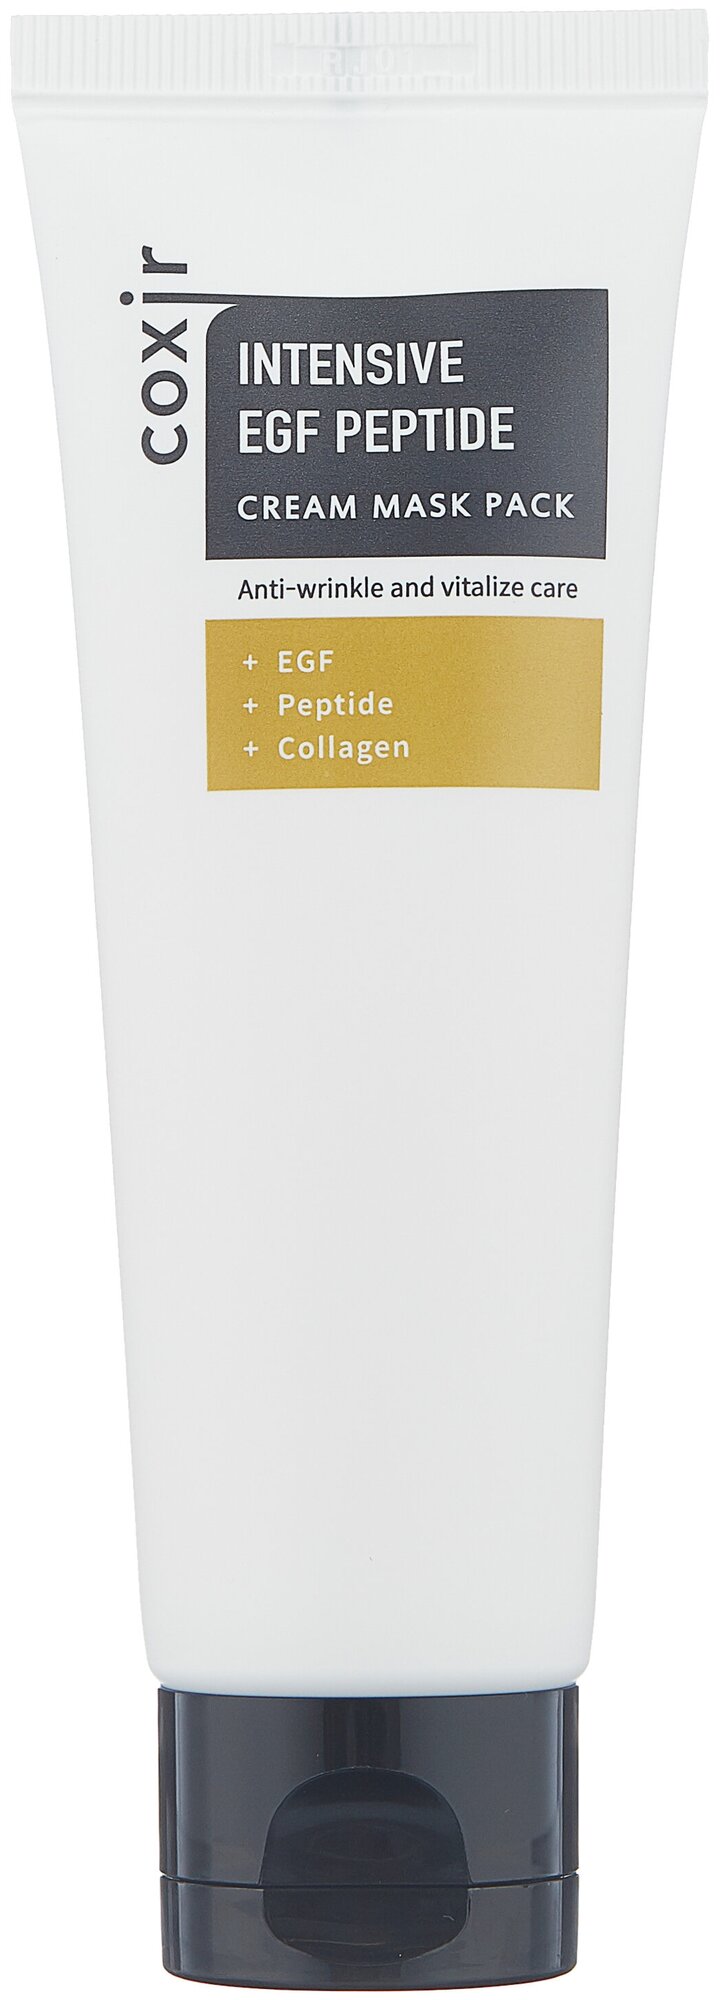 Маска Coxir для лица регенерирующая Intensive EGF Peptide Cream Mask Pack 80мл